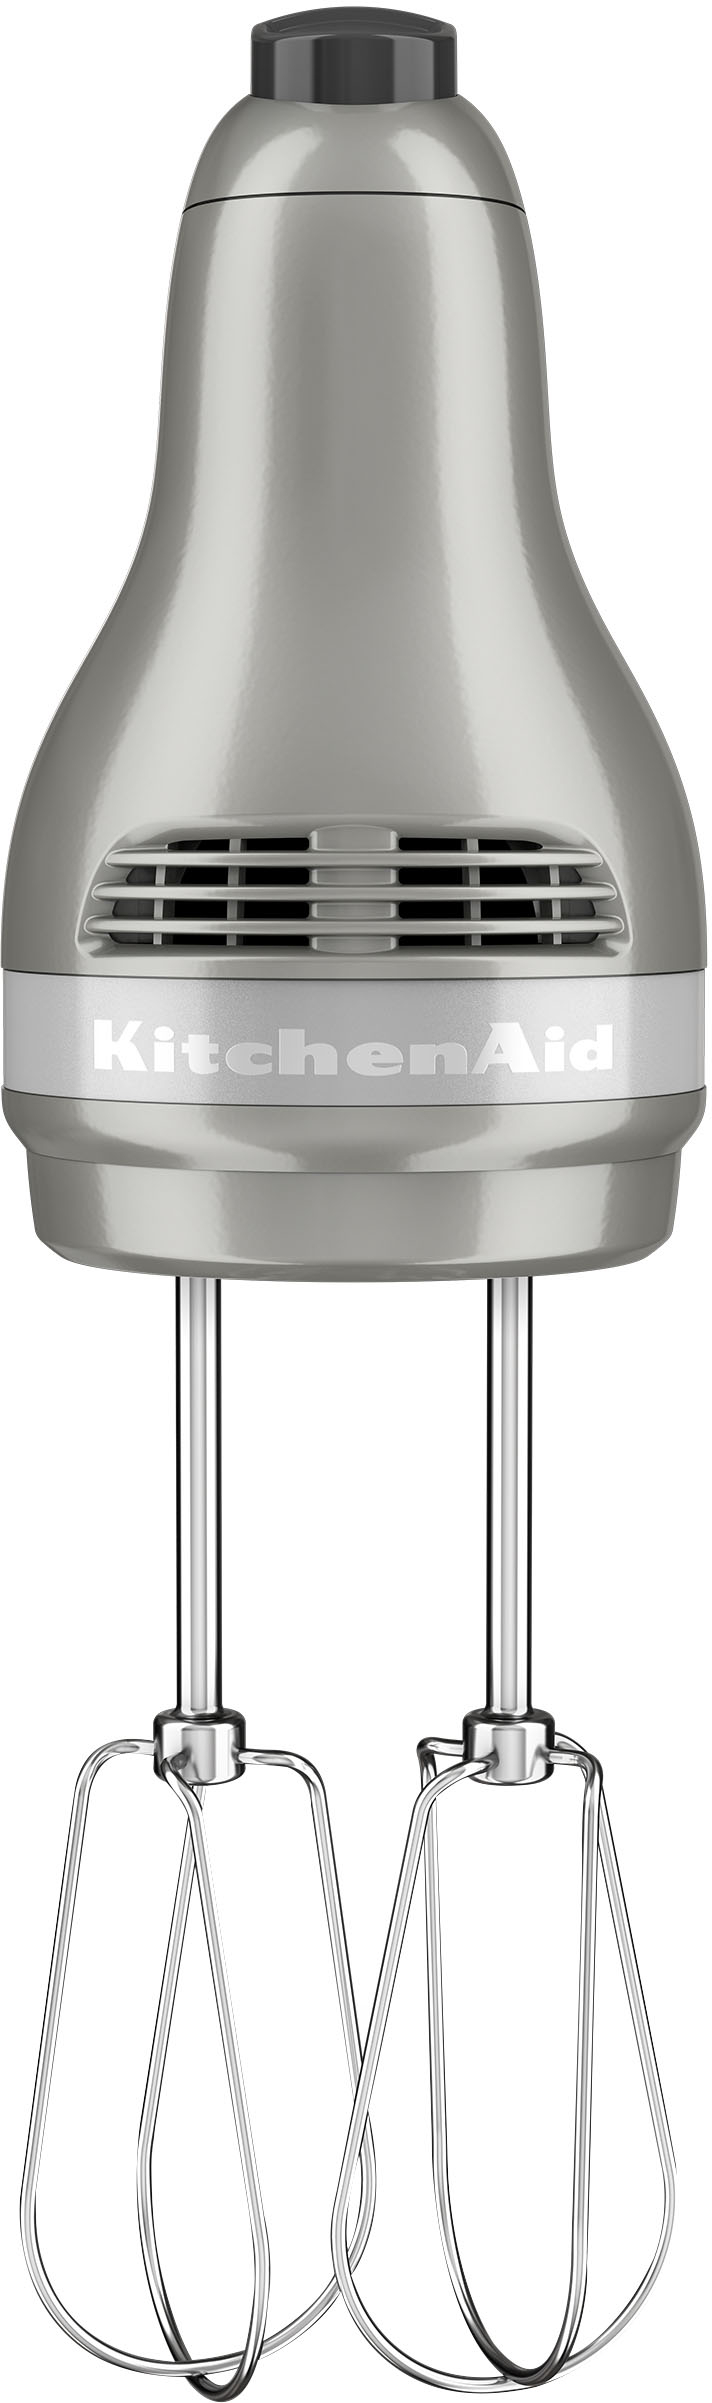 KitchenAid 5-Speed Ultra Power Hand Mixer 